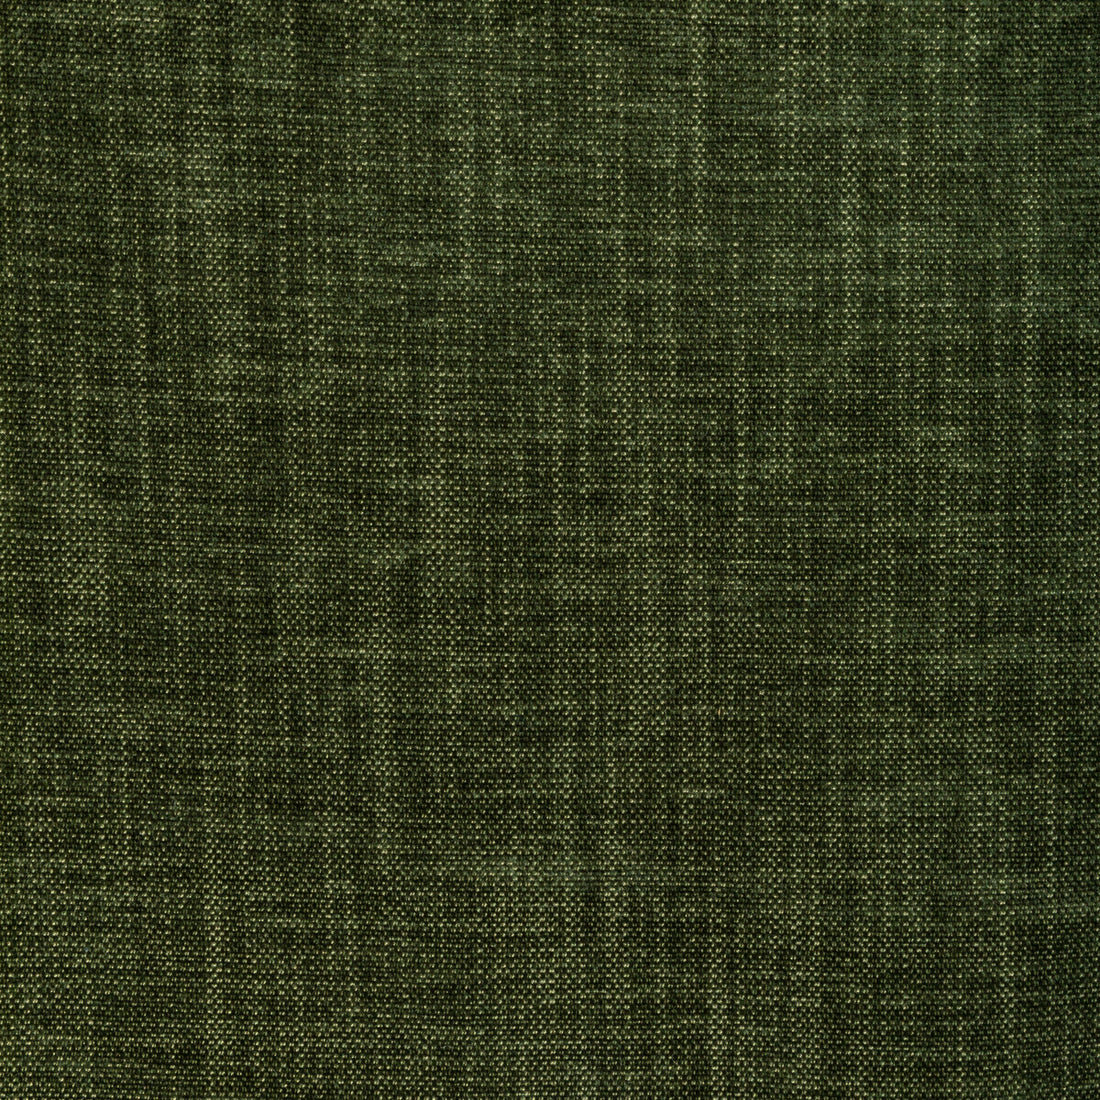 Kravet Smart fabric in 36650-30 color - pattern 36650.30.0 - by Kravet Smart in the Performance Kravetarmor collection